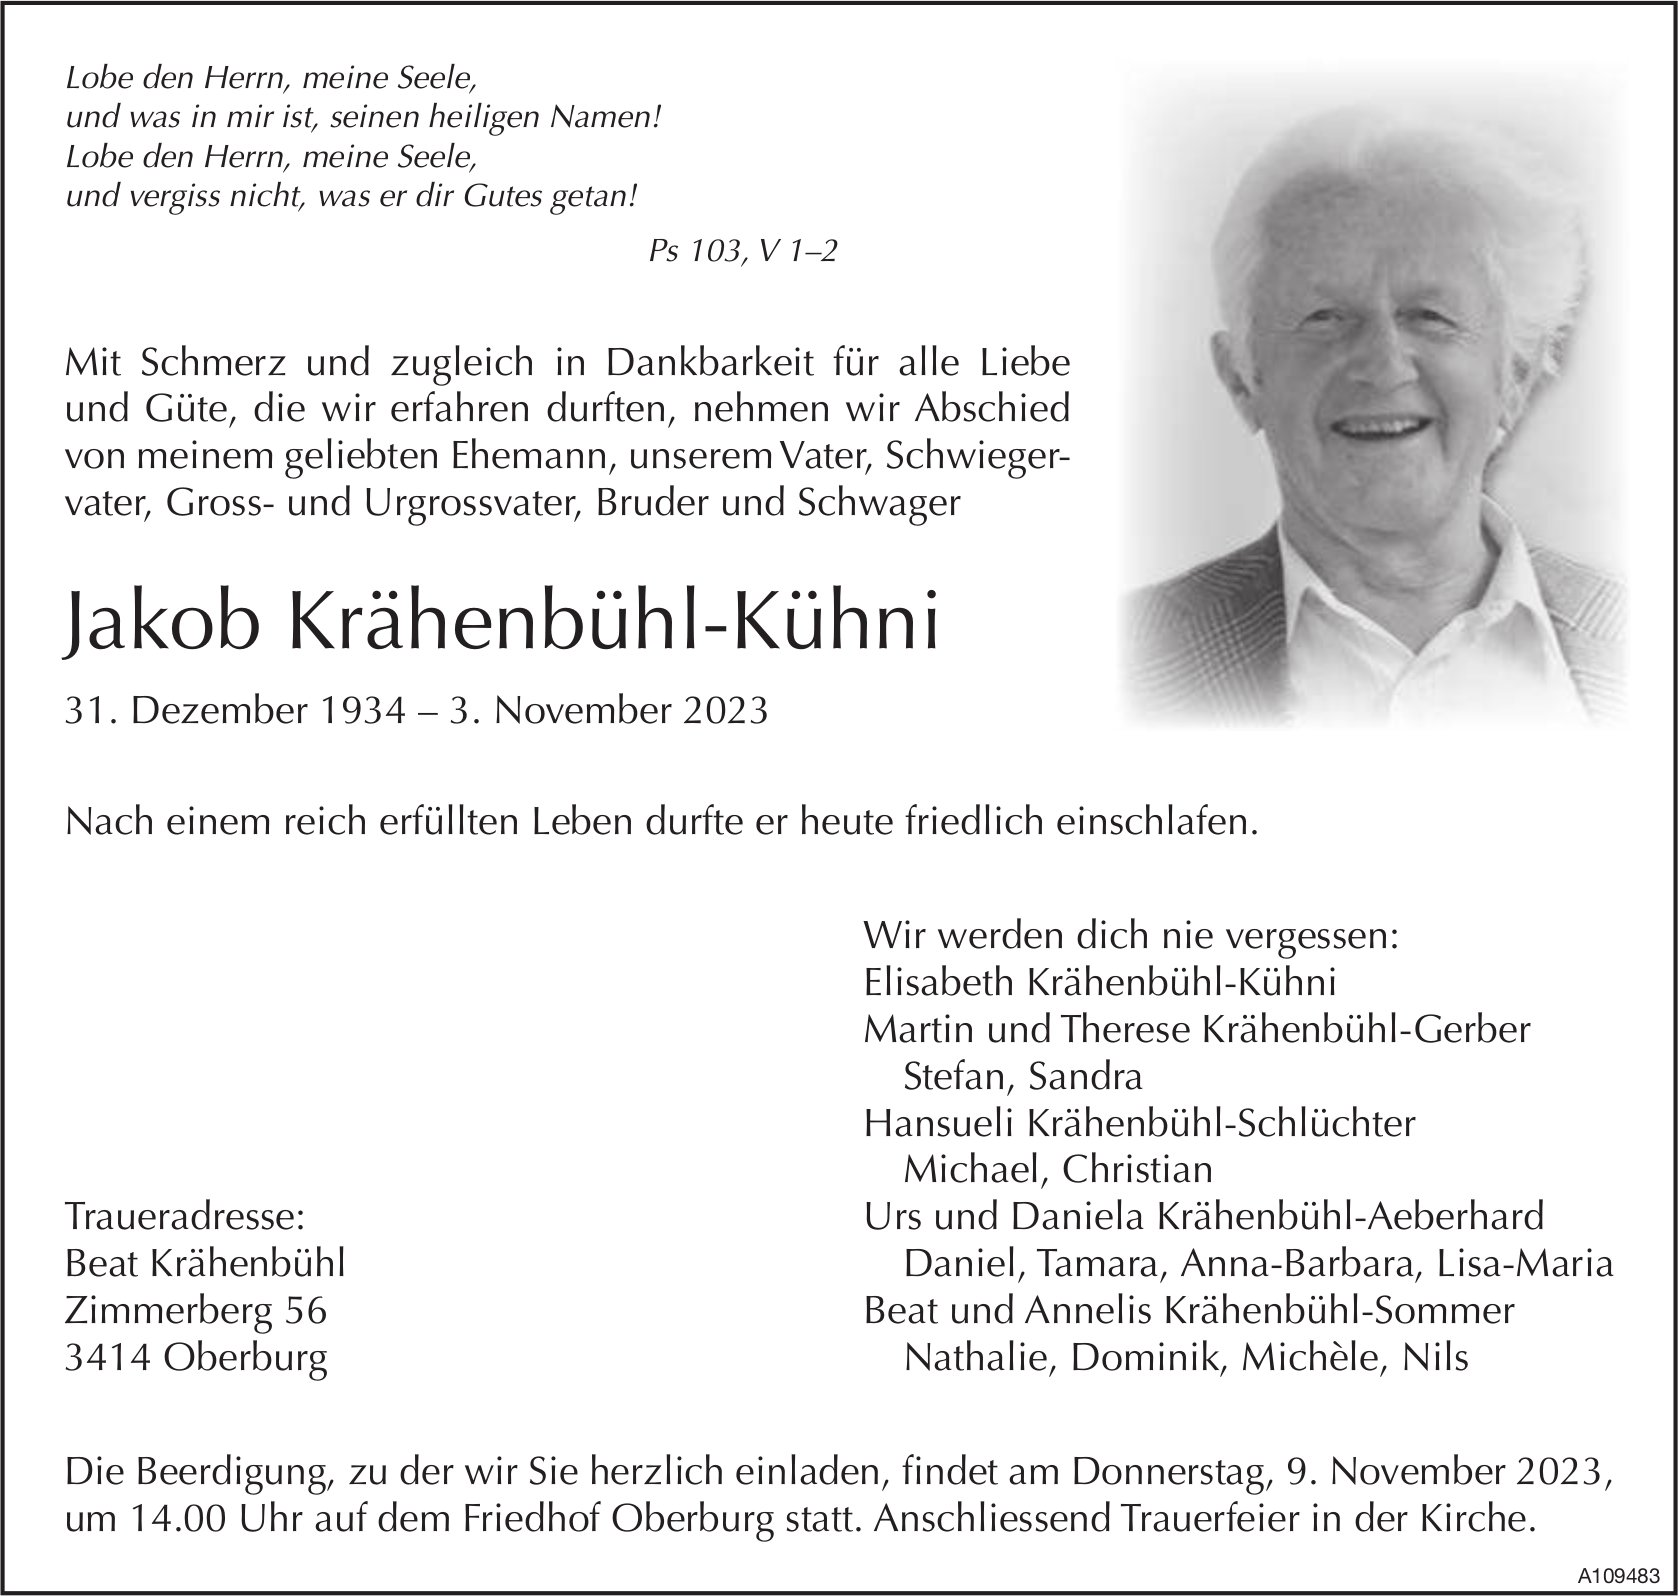 Jakob Krähenbühl-Kühni, November 2023 / TA